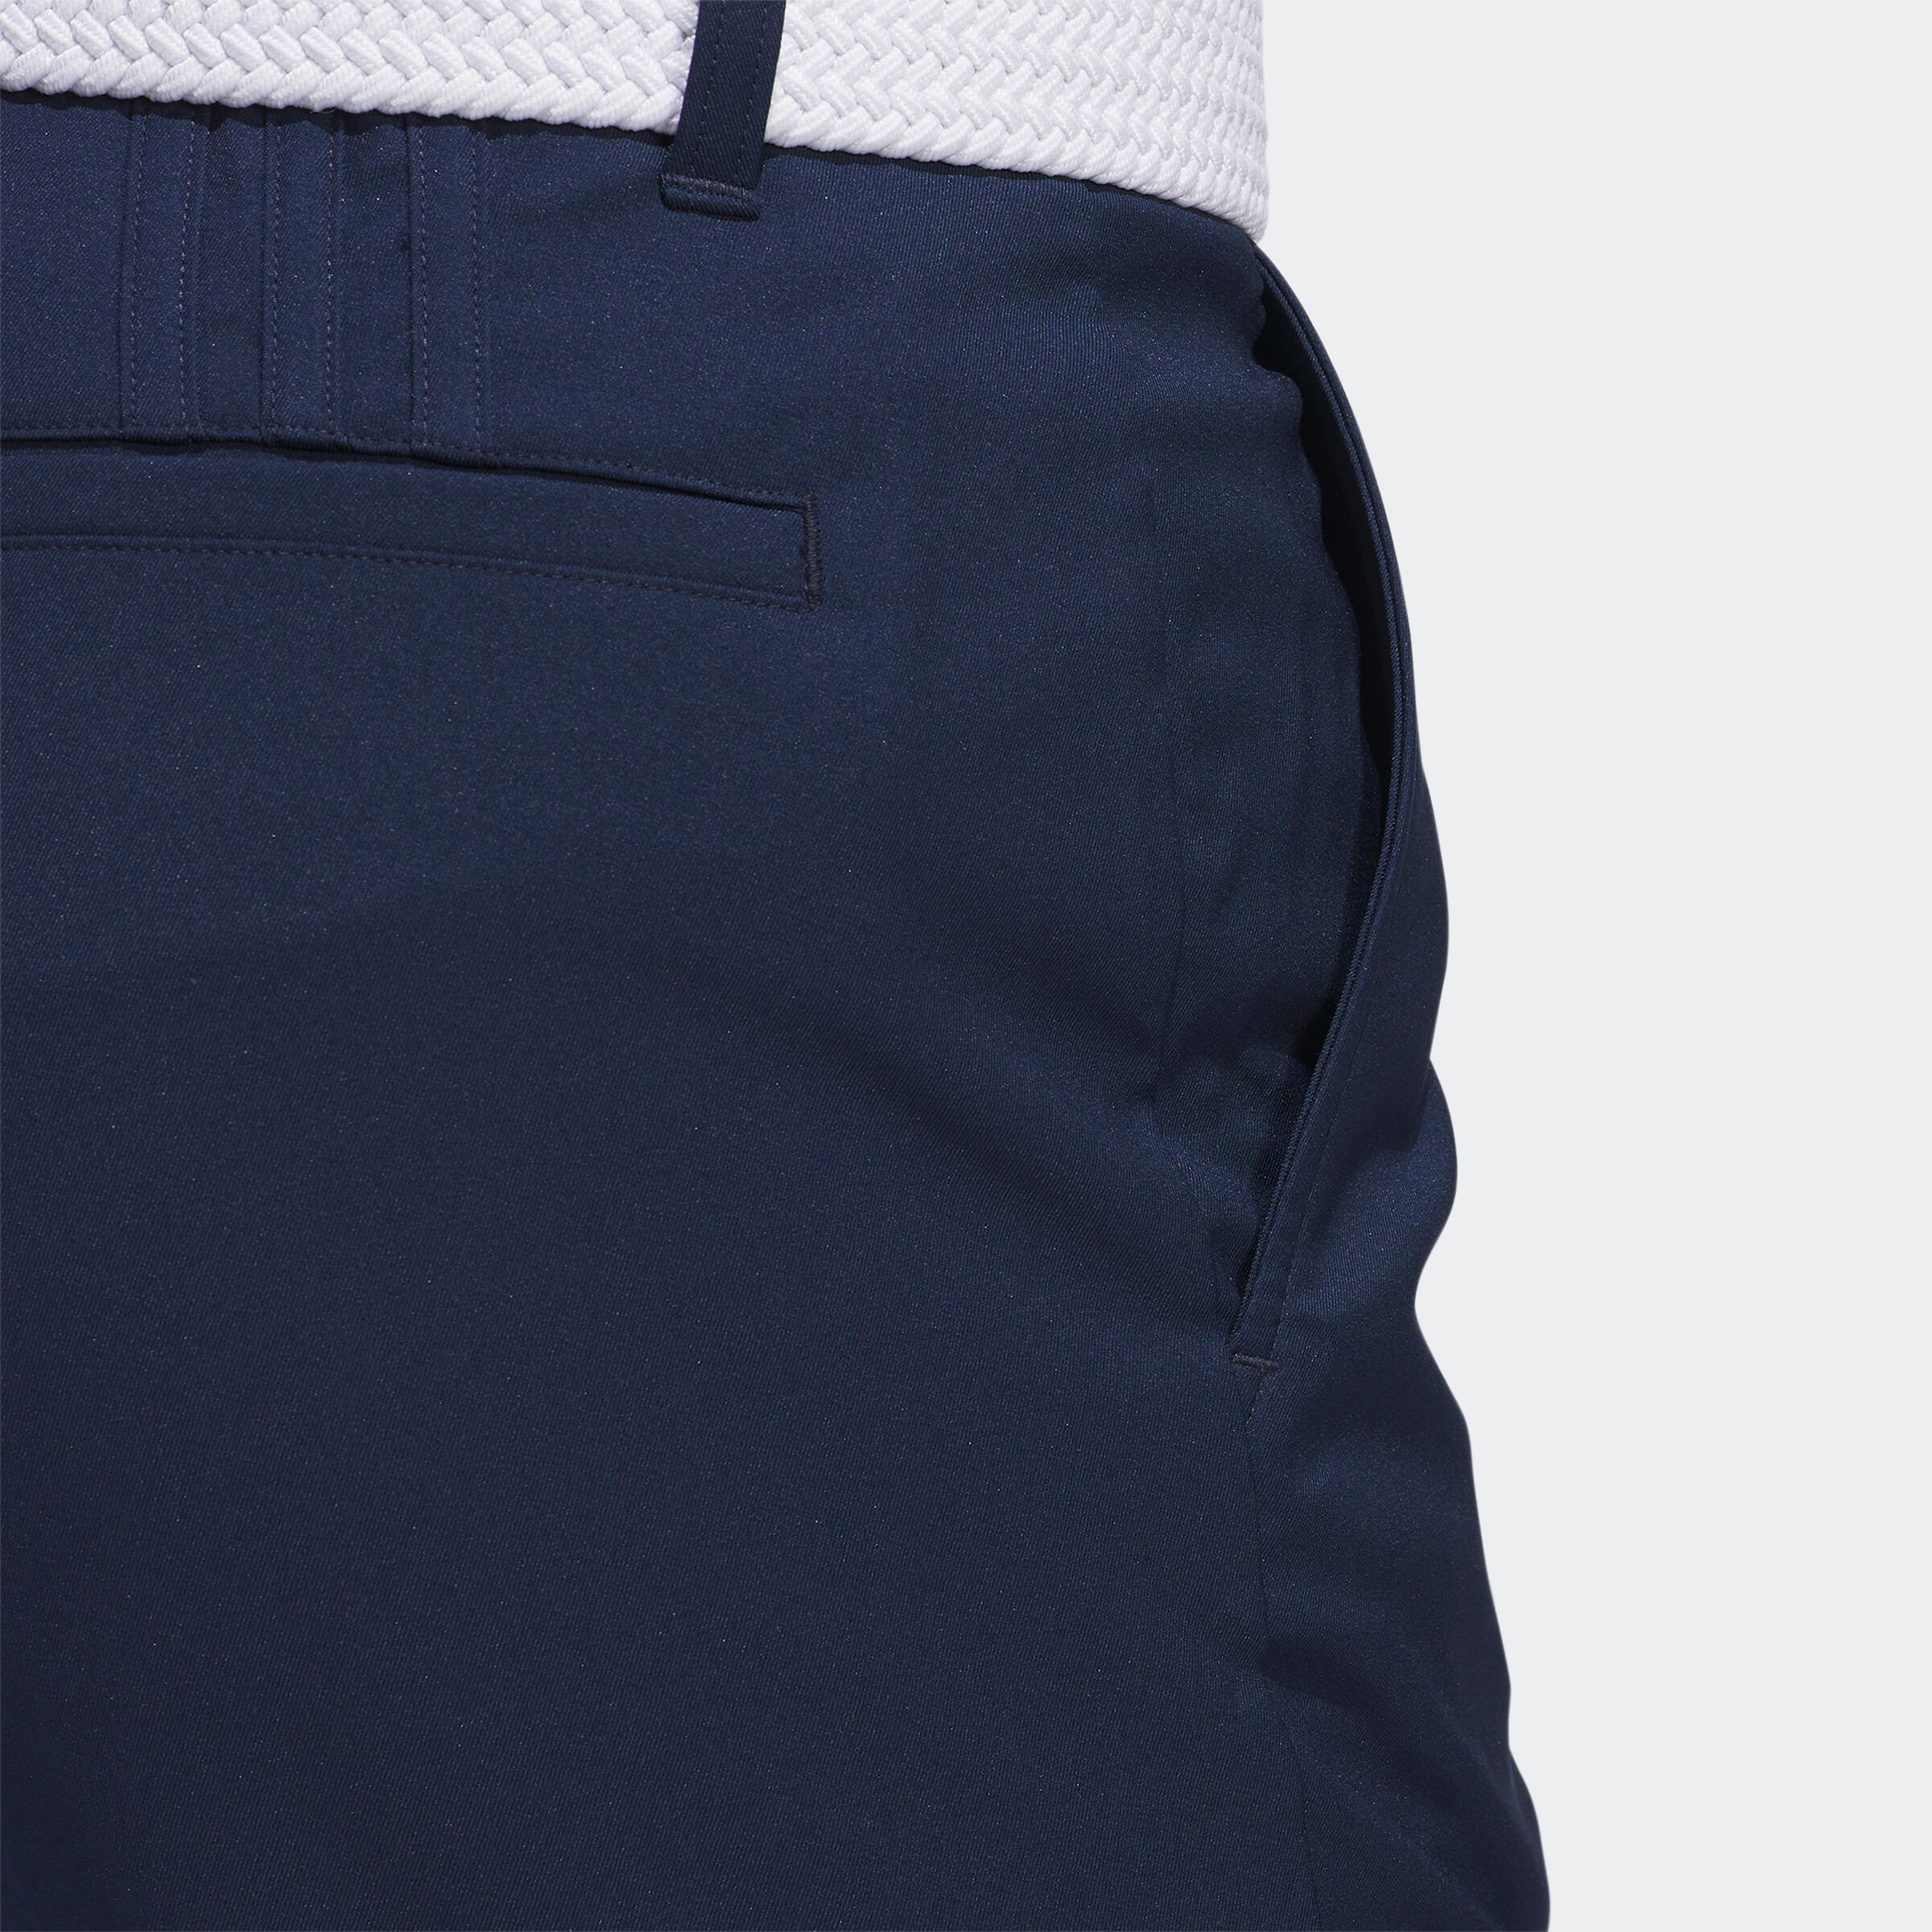 Men's golf Bermuda shorts - Adidas navy blue 3/4